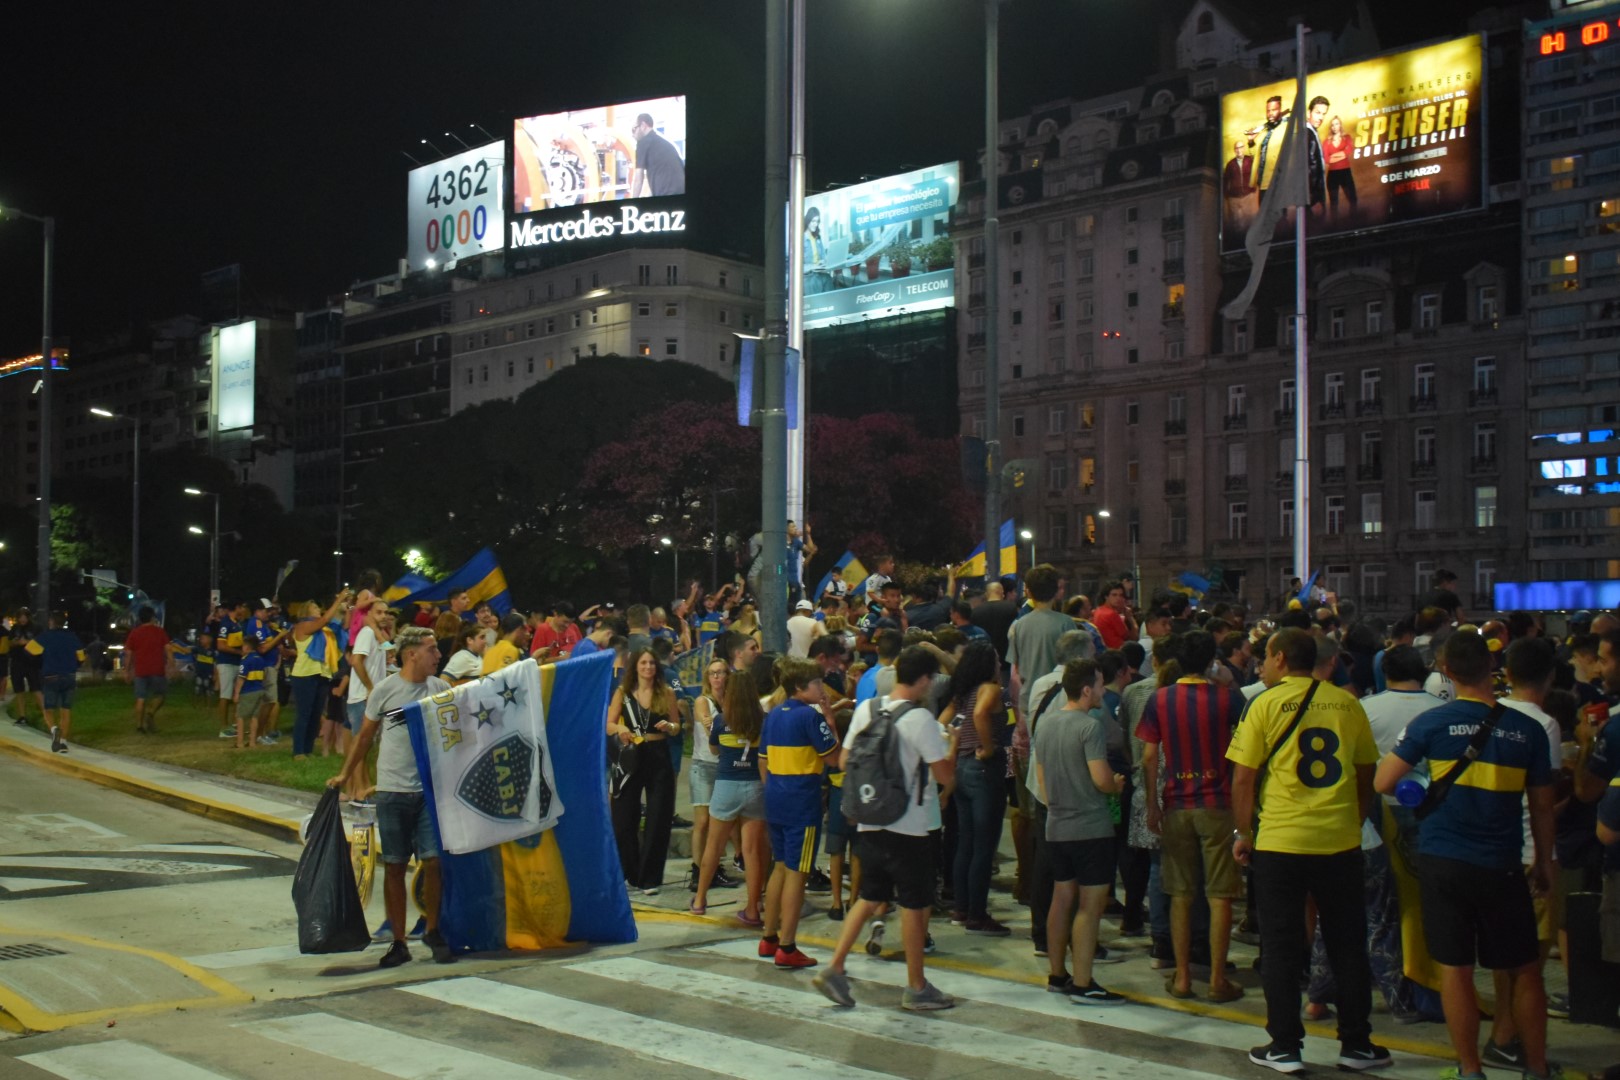 Boca fans celebrating winning the Superliga Argentina on 9 de Julio